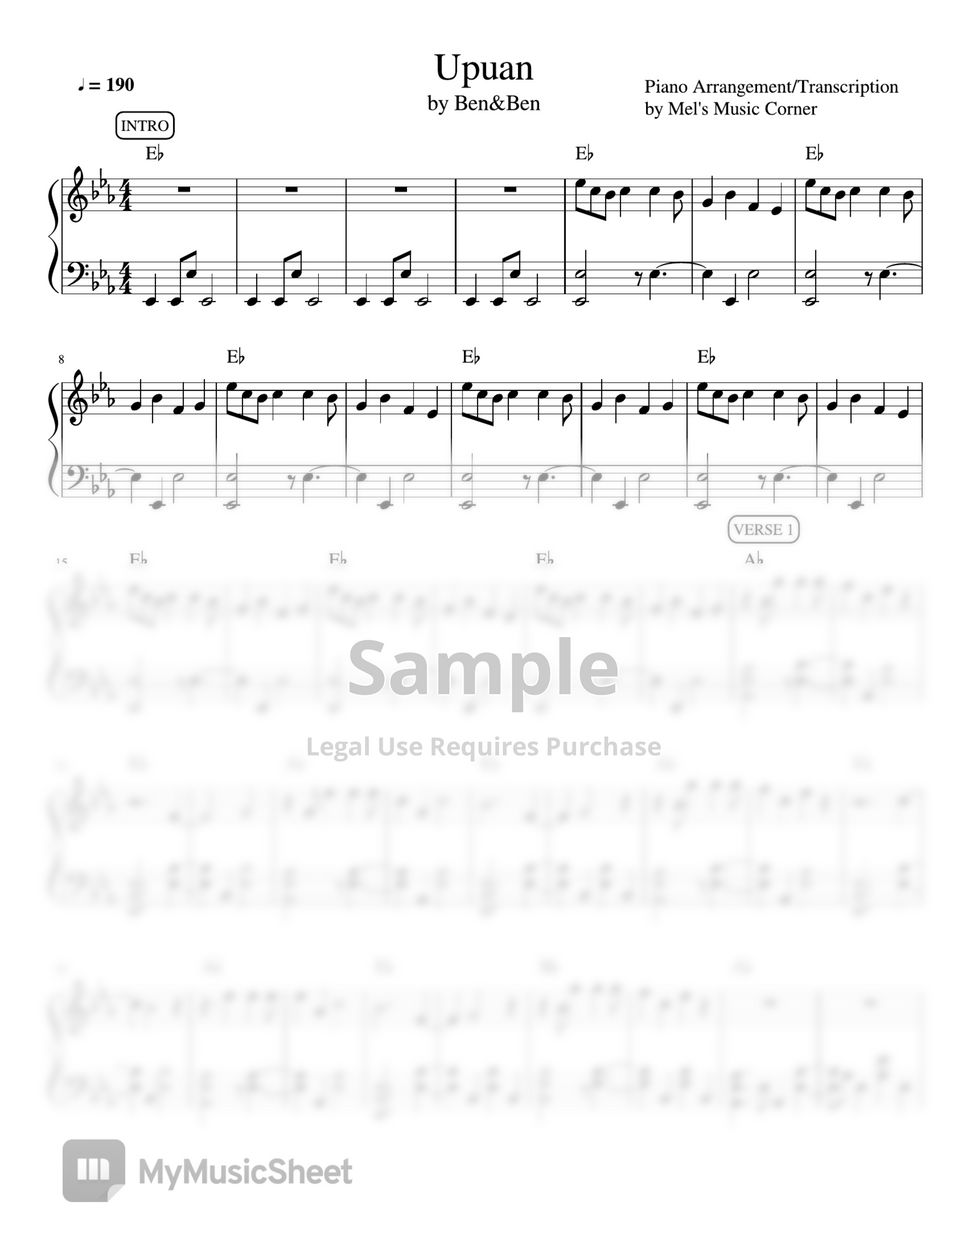 Ben&Ben - Upuan (piano sheet music) by Mel's Music Corner